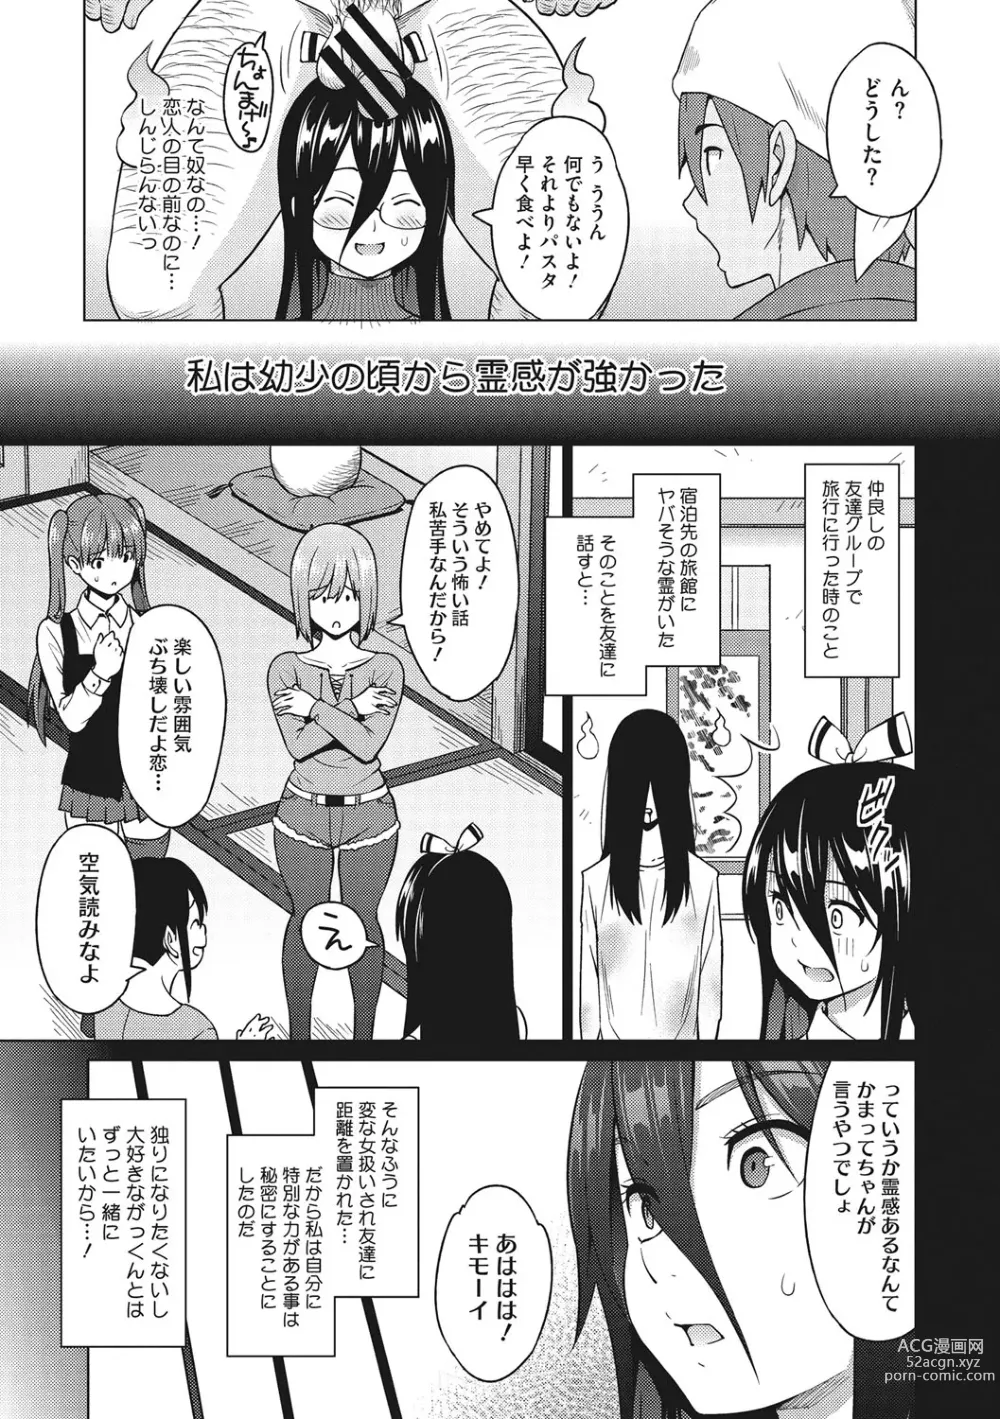 Page 6 of manga Risky Play